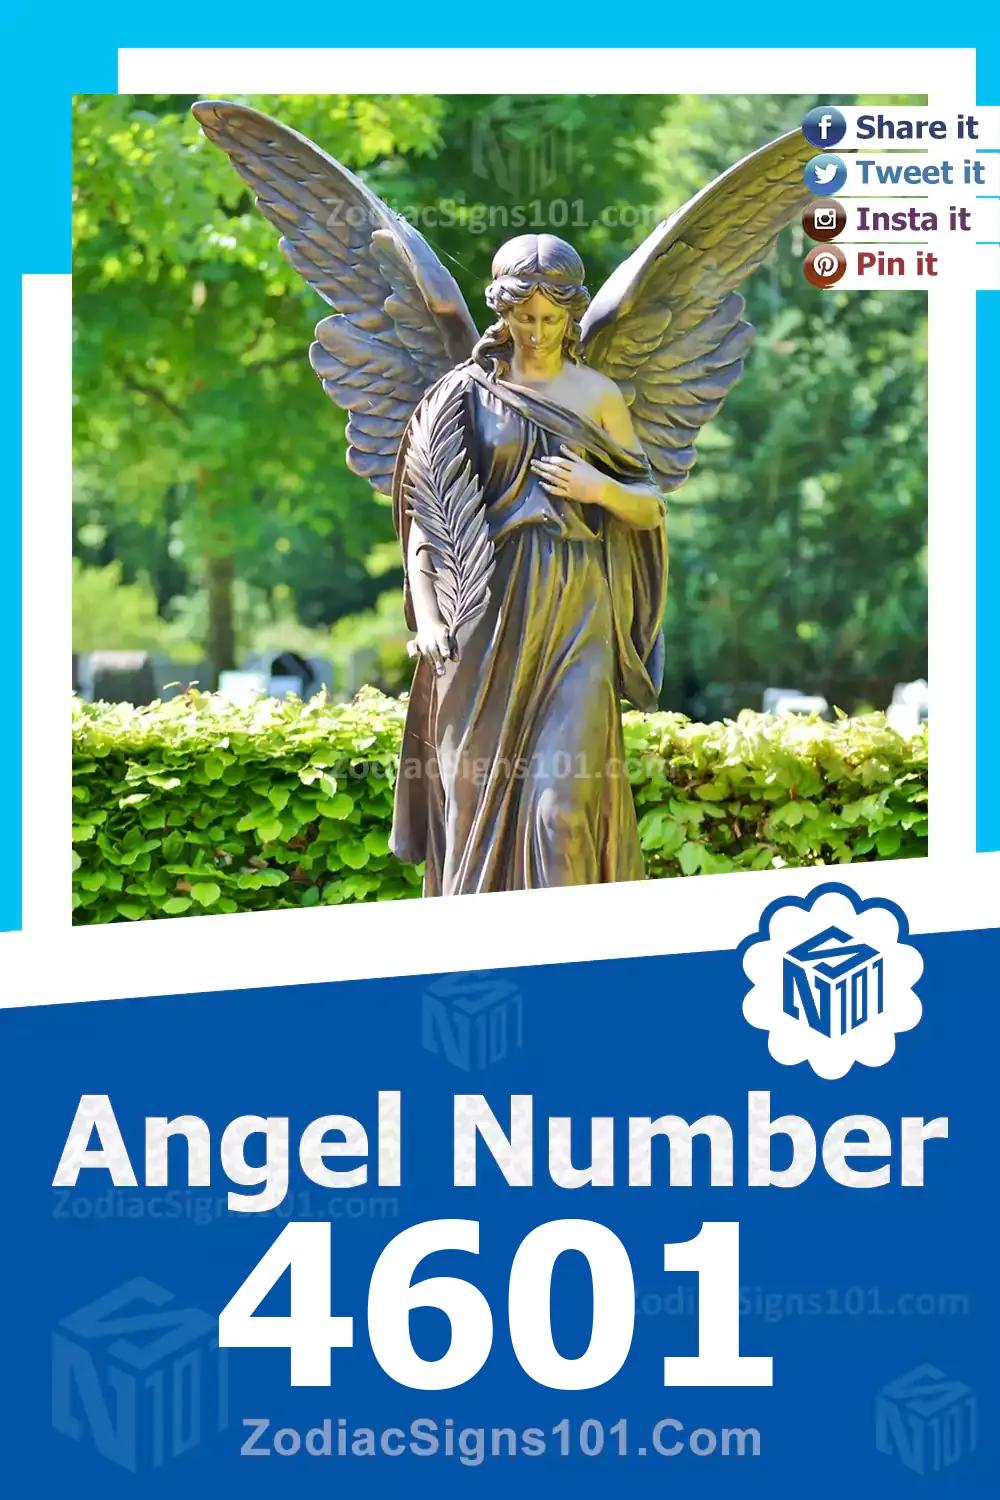 4601-Angel-Number-Meaning.jpg